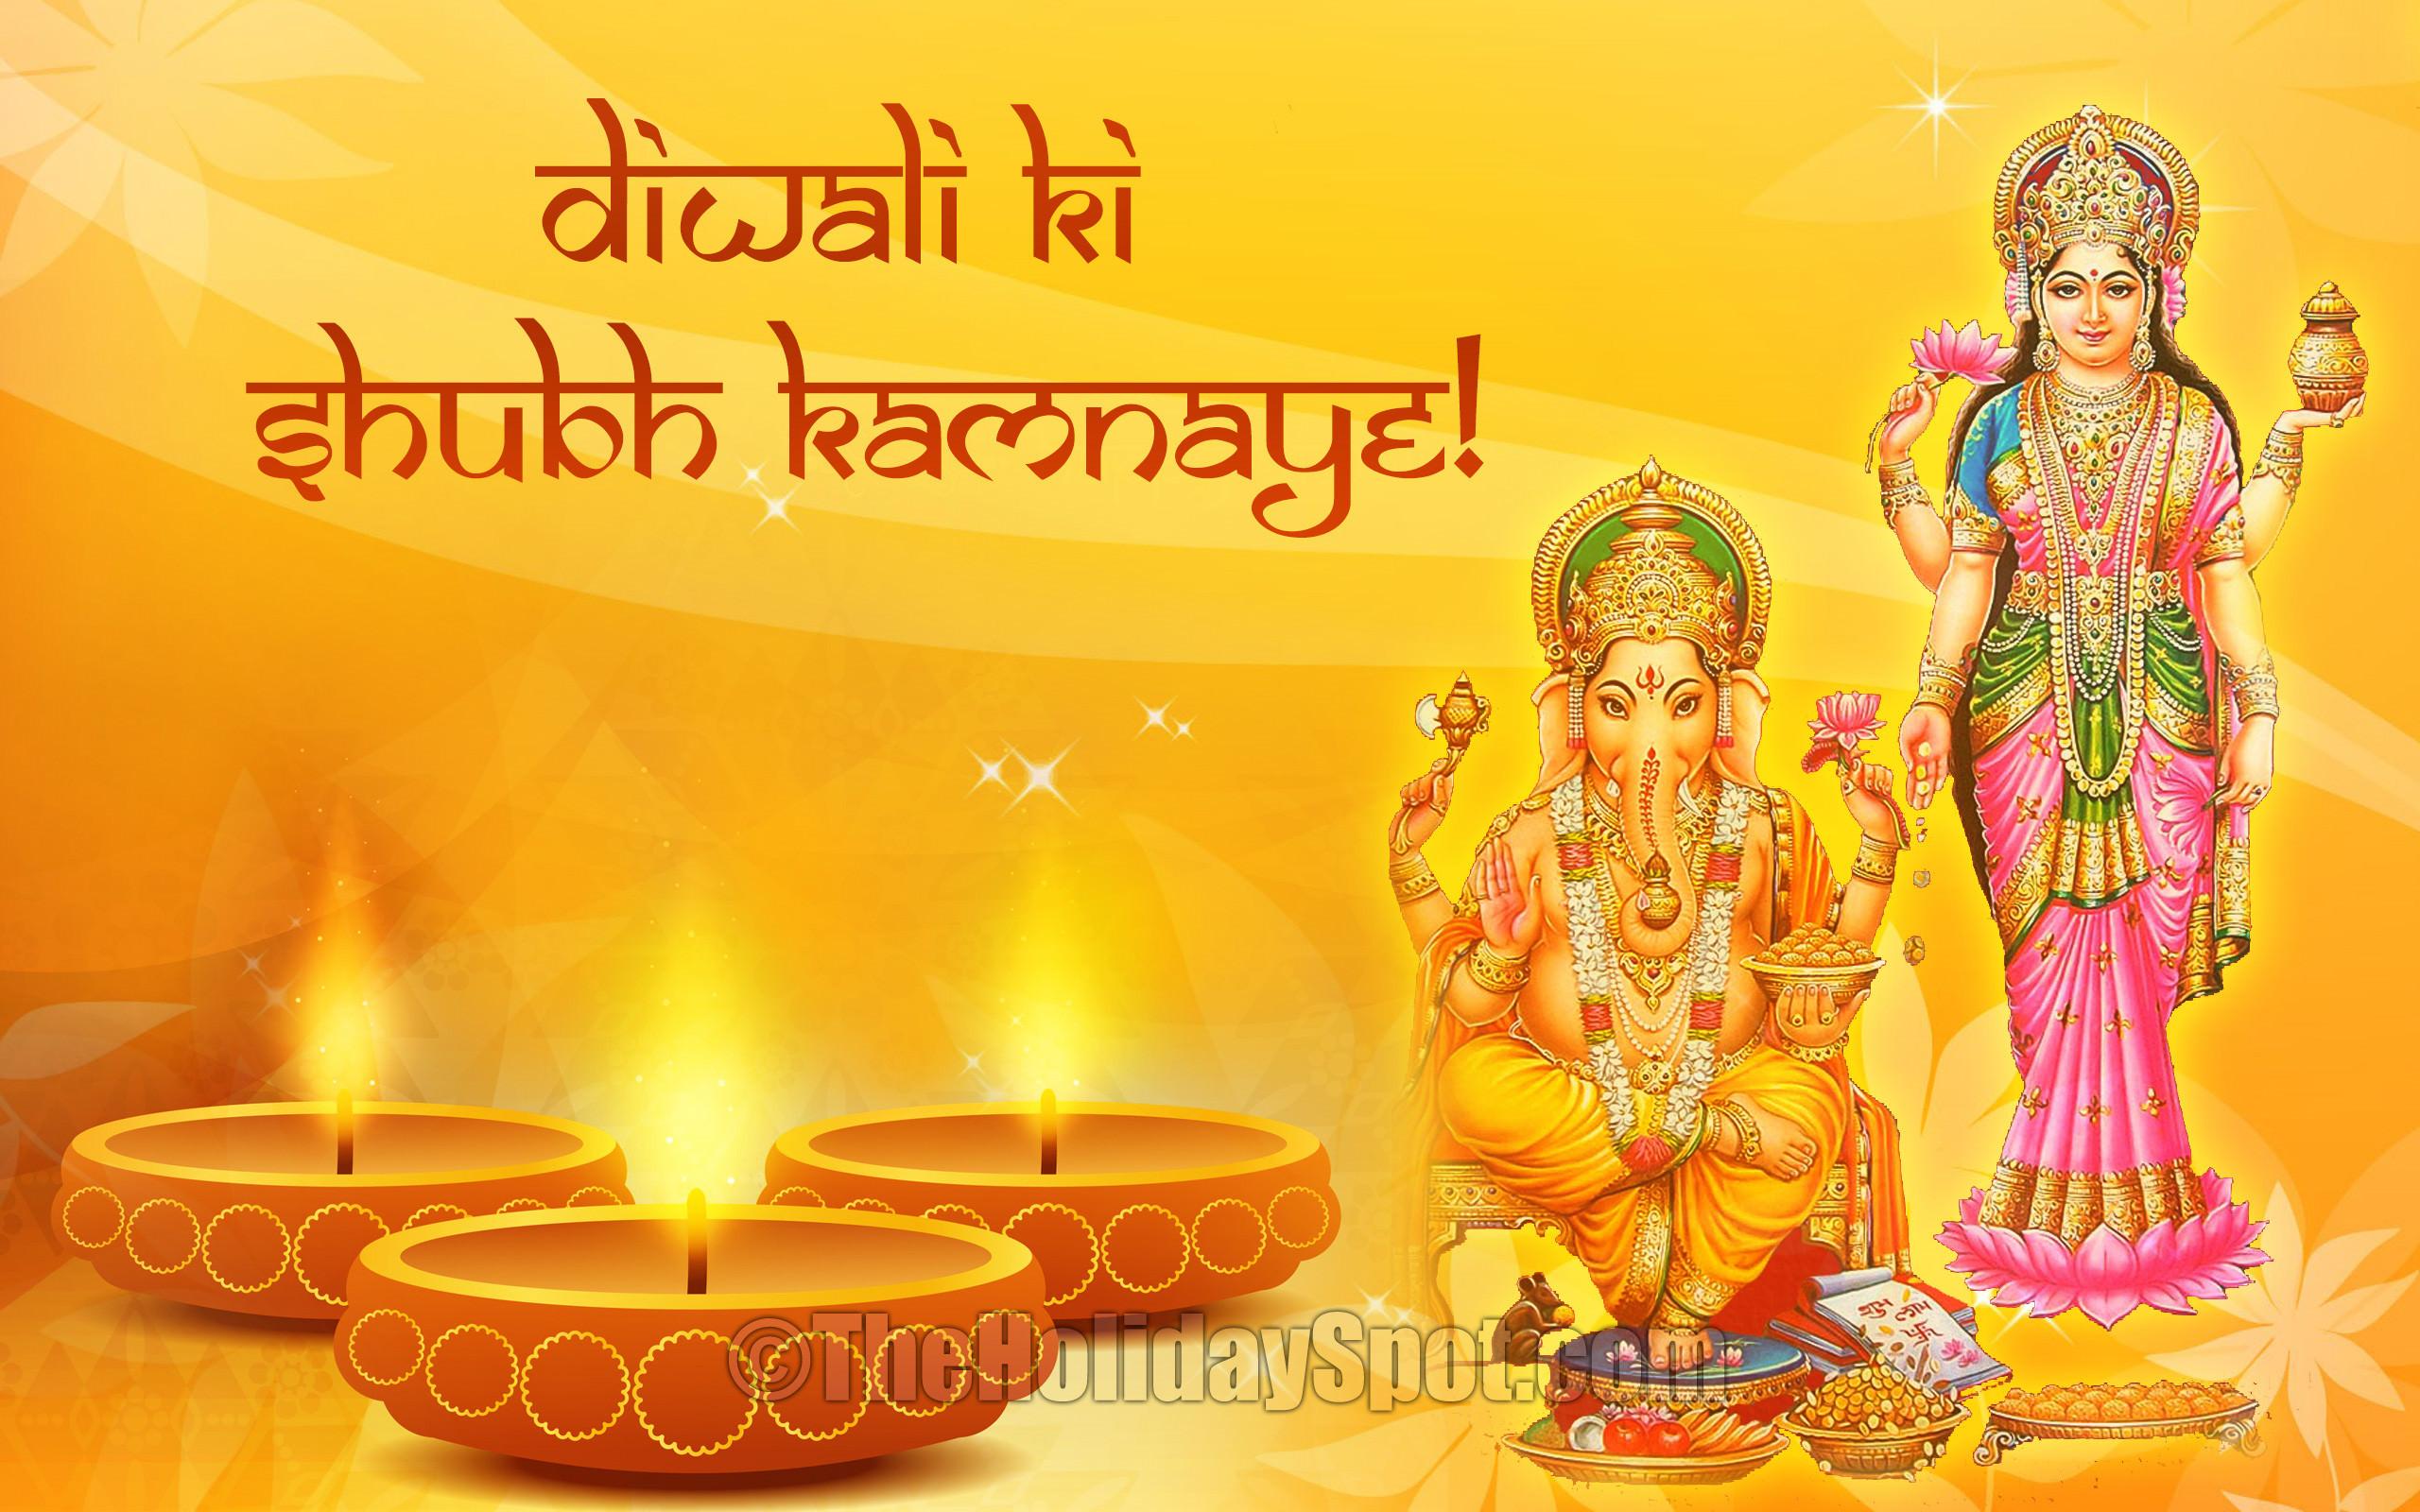 Lakshmi Ganesh Whatsapp dp for dhanteras: Diwali image wallpaper